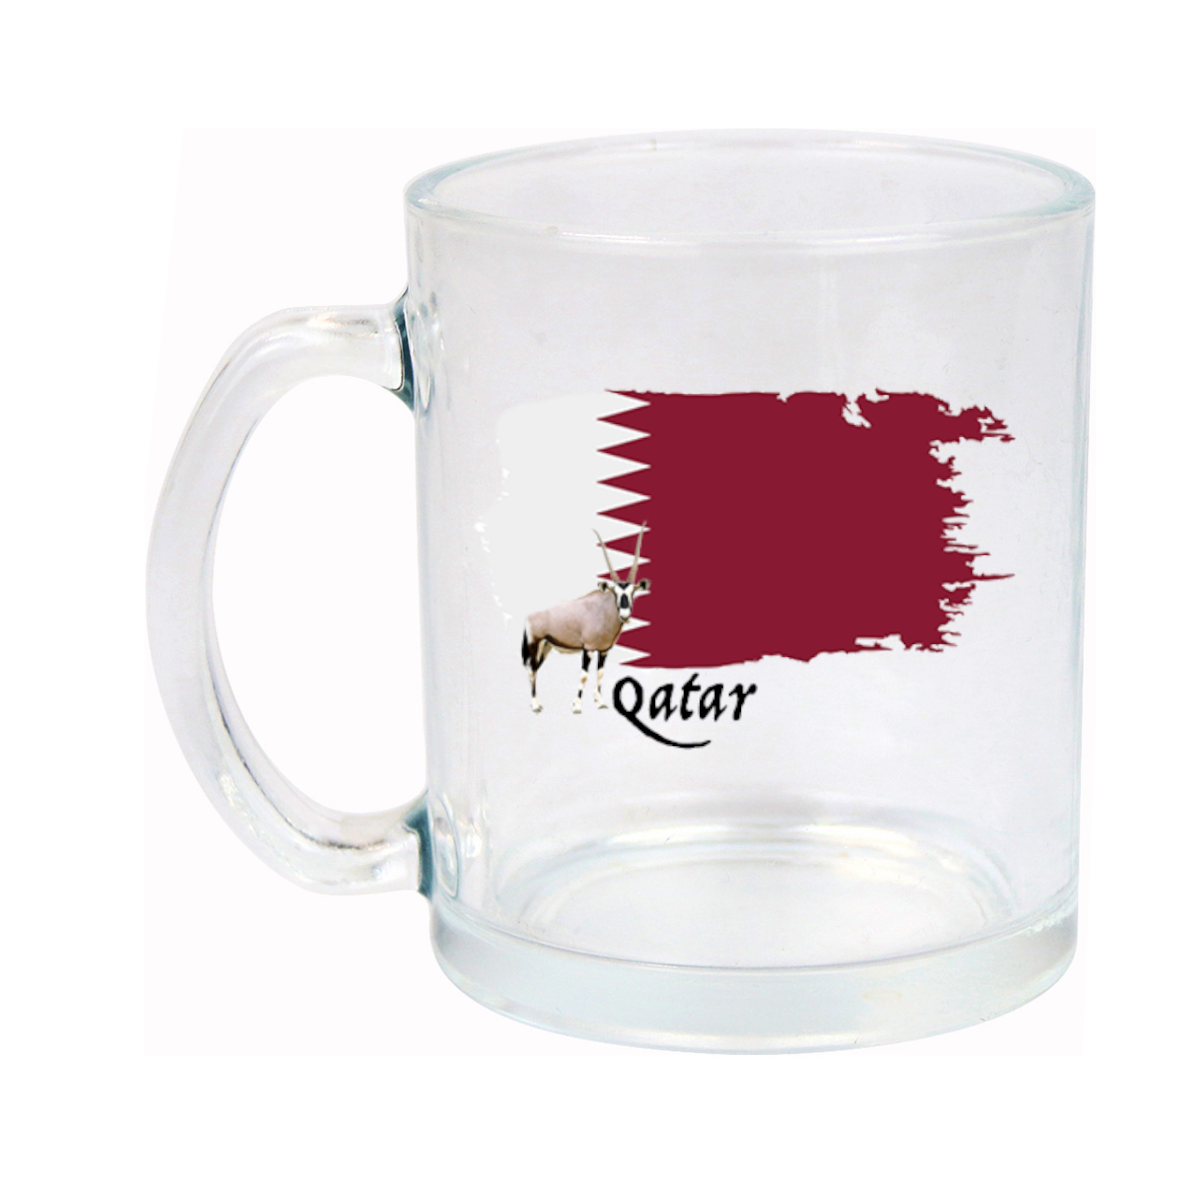 AGAD Turista (I Love Qatar Glass Mug)